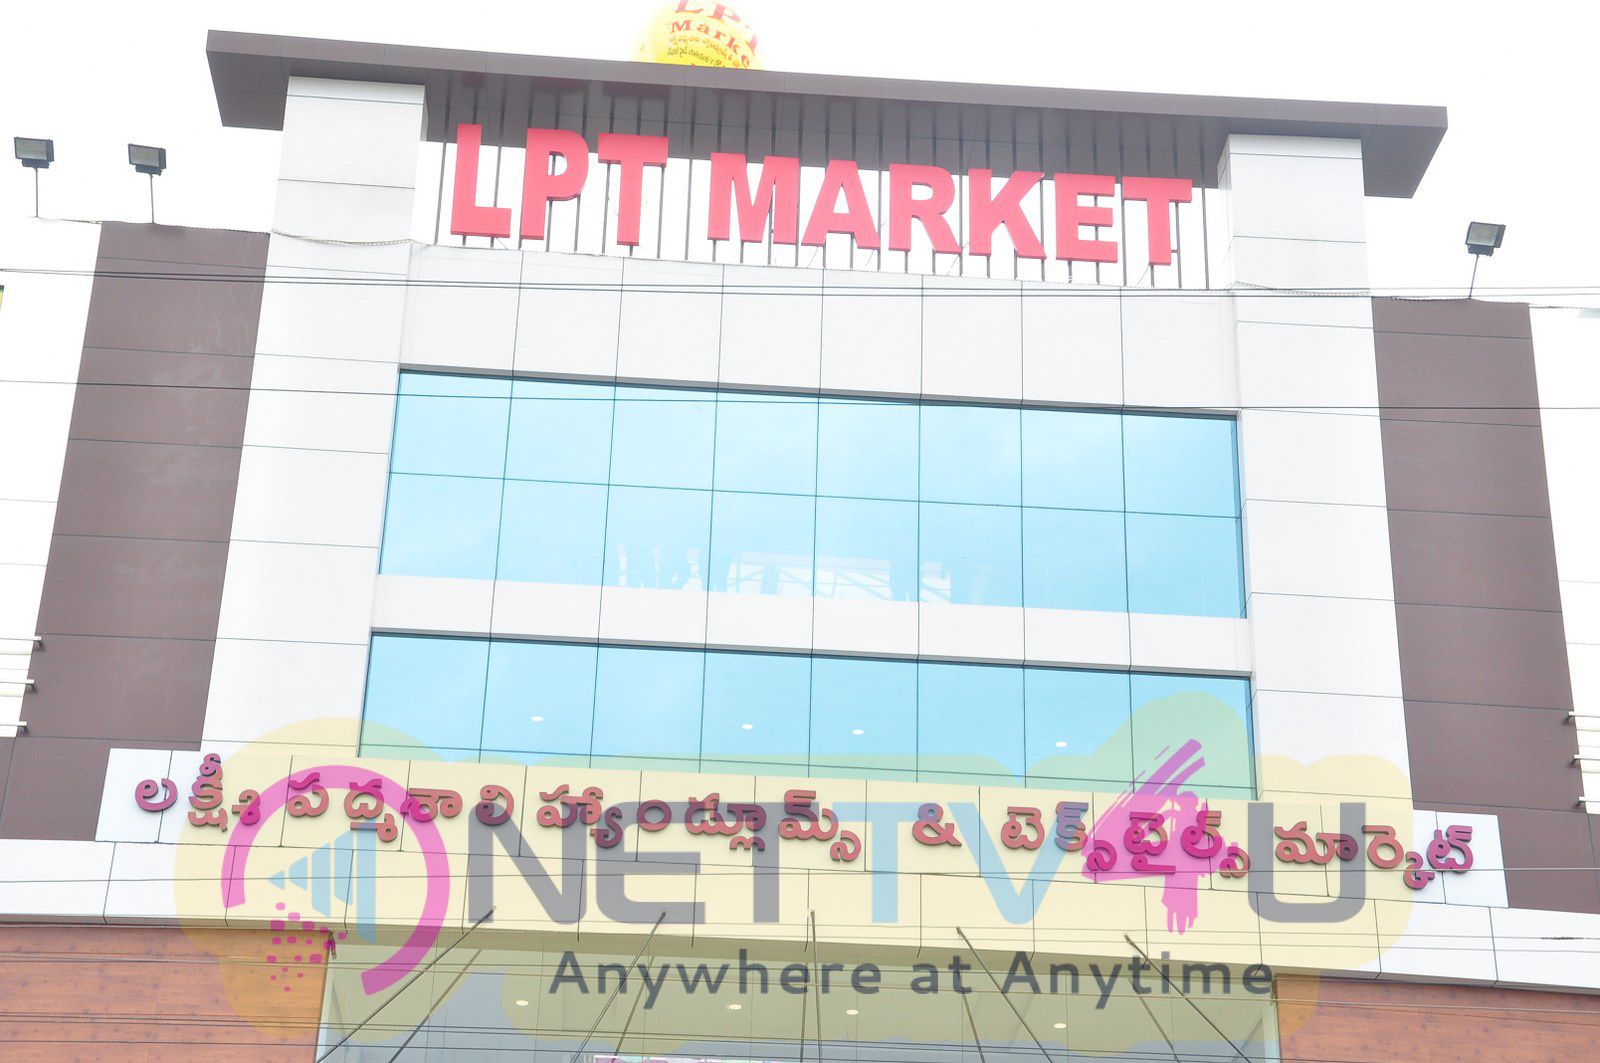 Actress Rakul Preet Singh Inaugurates LPT Market Exclusive Photos Telugu Gallery